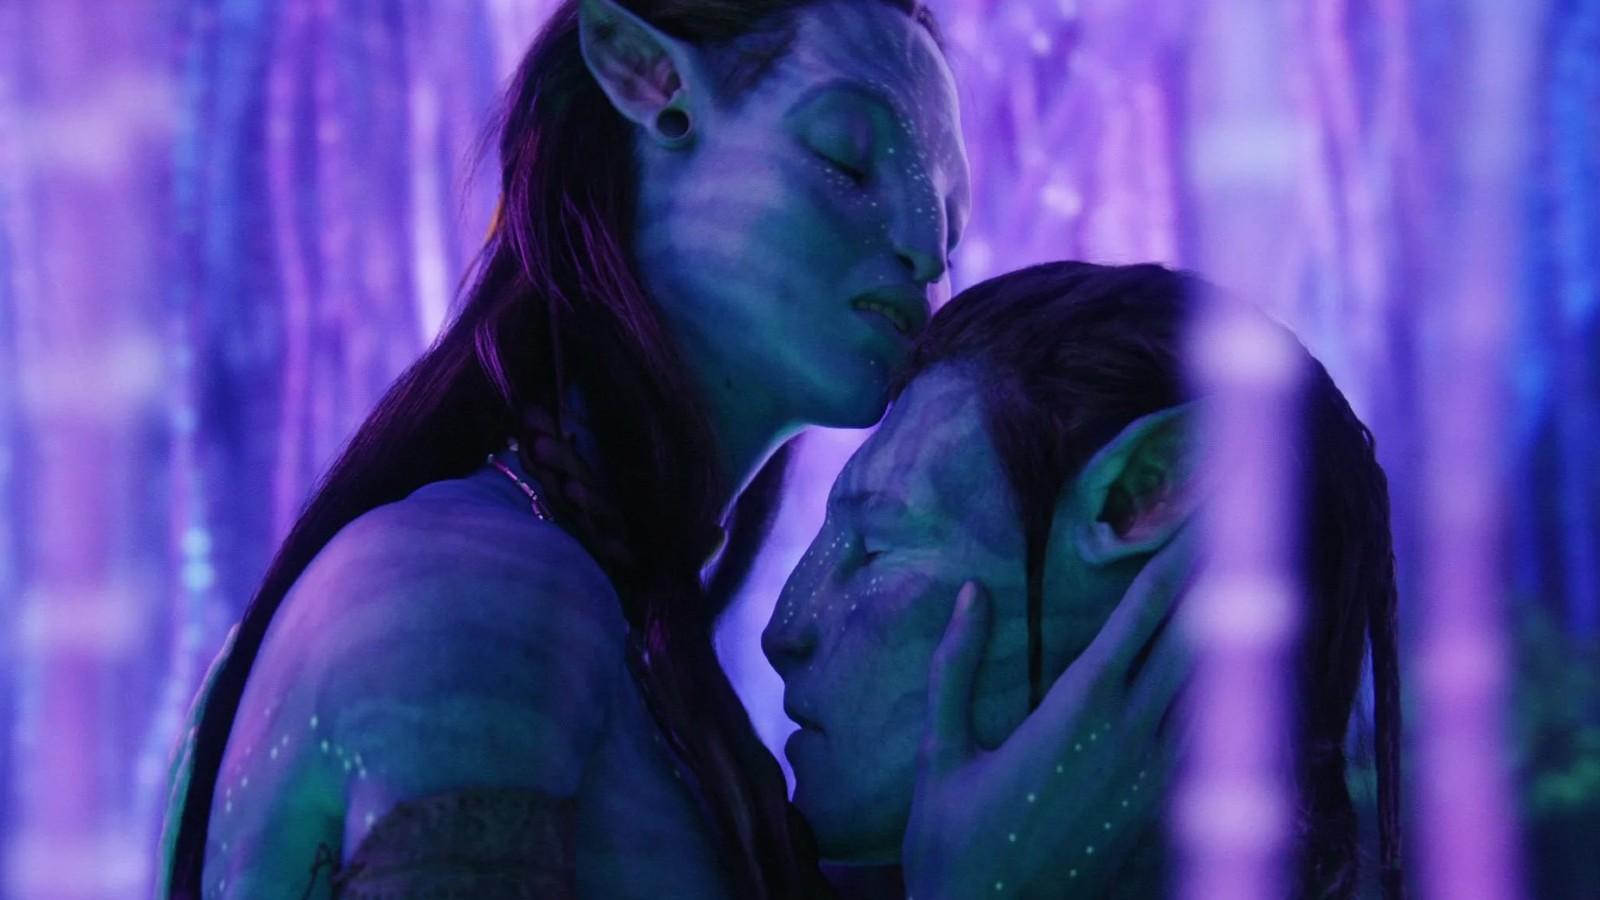 Jake and Neytiri during the hair sex scene in Avatar